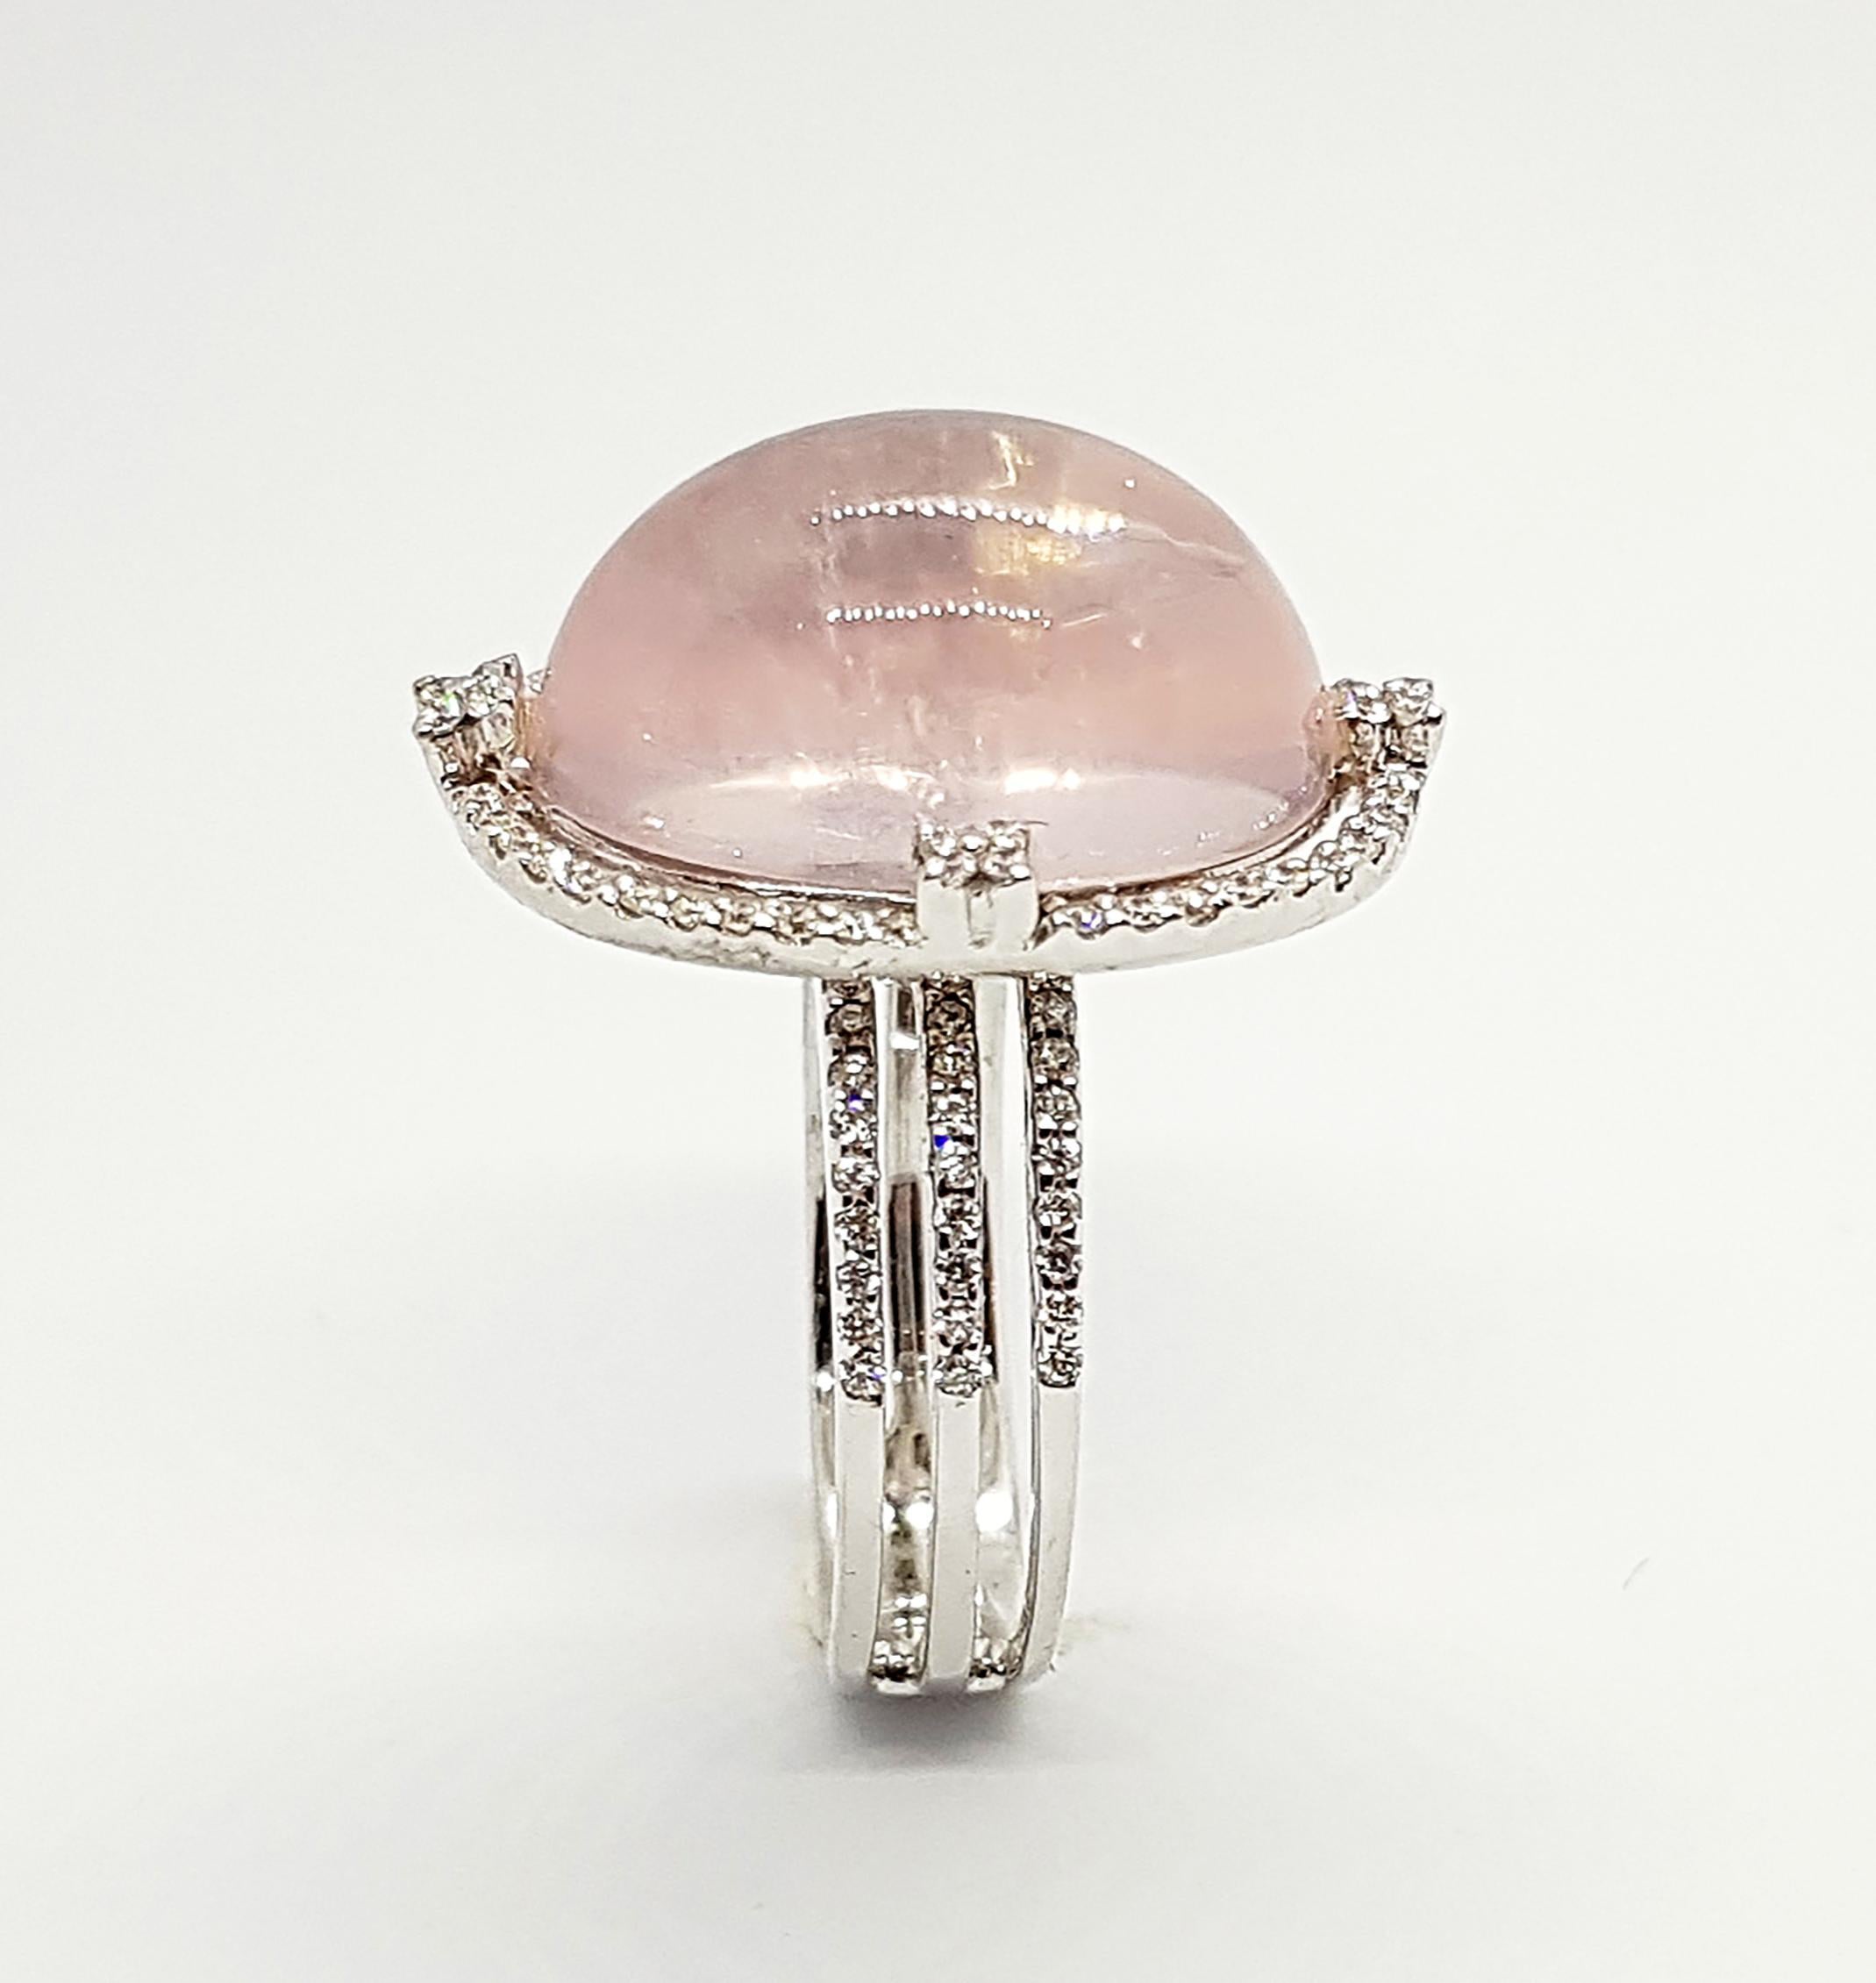 Rose Quartz 16.61 carats with Diamond 0.54 carat Ring set in 18 Karat White Gold Settings

Width:  1.7 cm 
Length: 2.4 cm
Ring Size: 54
Total Weight: 12.36 grams

